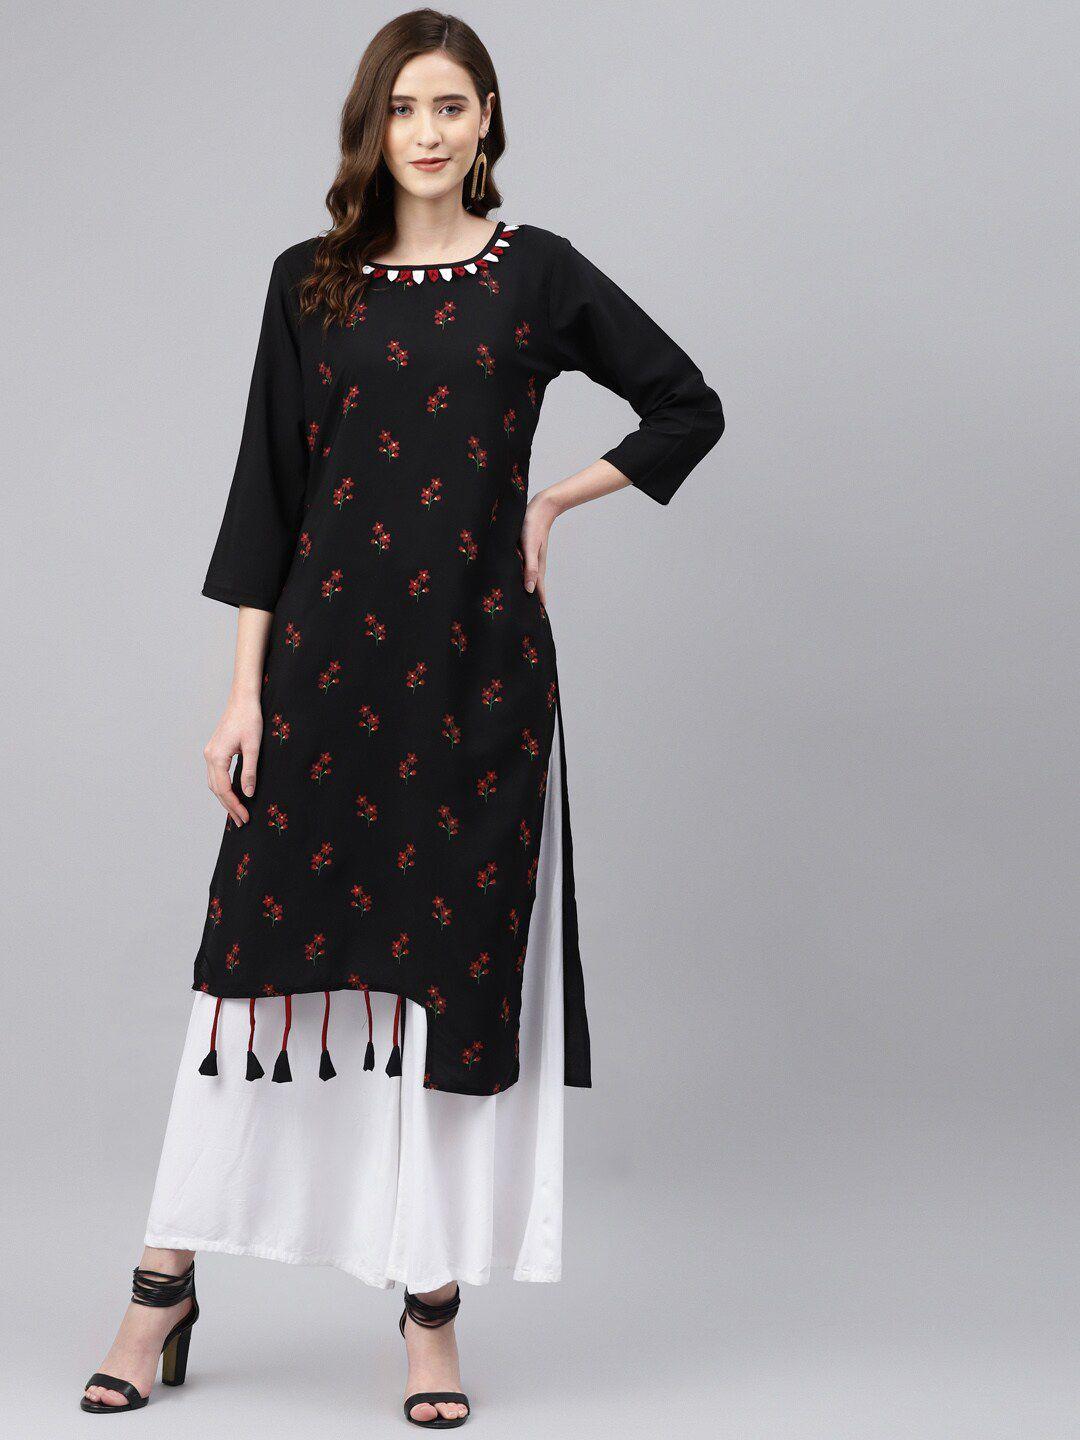 somras women black & red floral printed asymmetric kurta